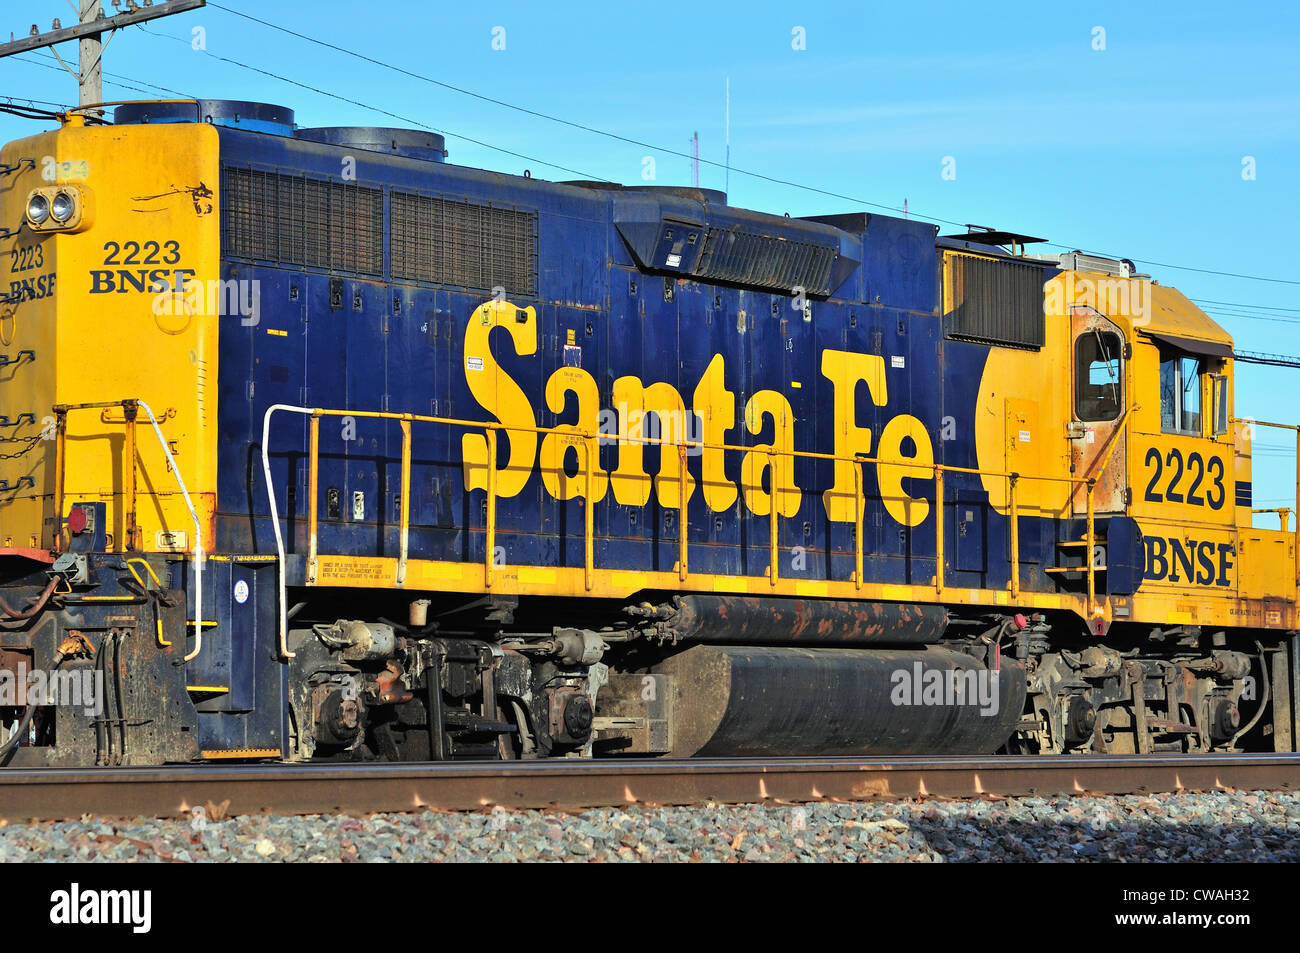 Burlington Northern Santa Fe Railway unit #2223 in old Santa Fe Railway color scheme at Rochelle, Illinois, USA. Stock Photo